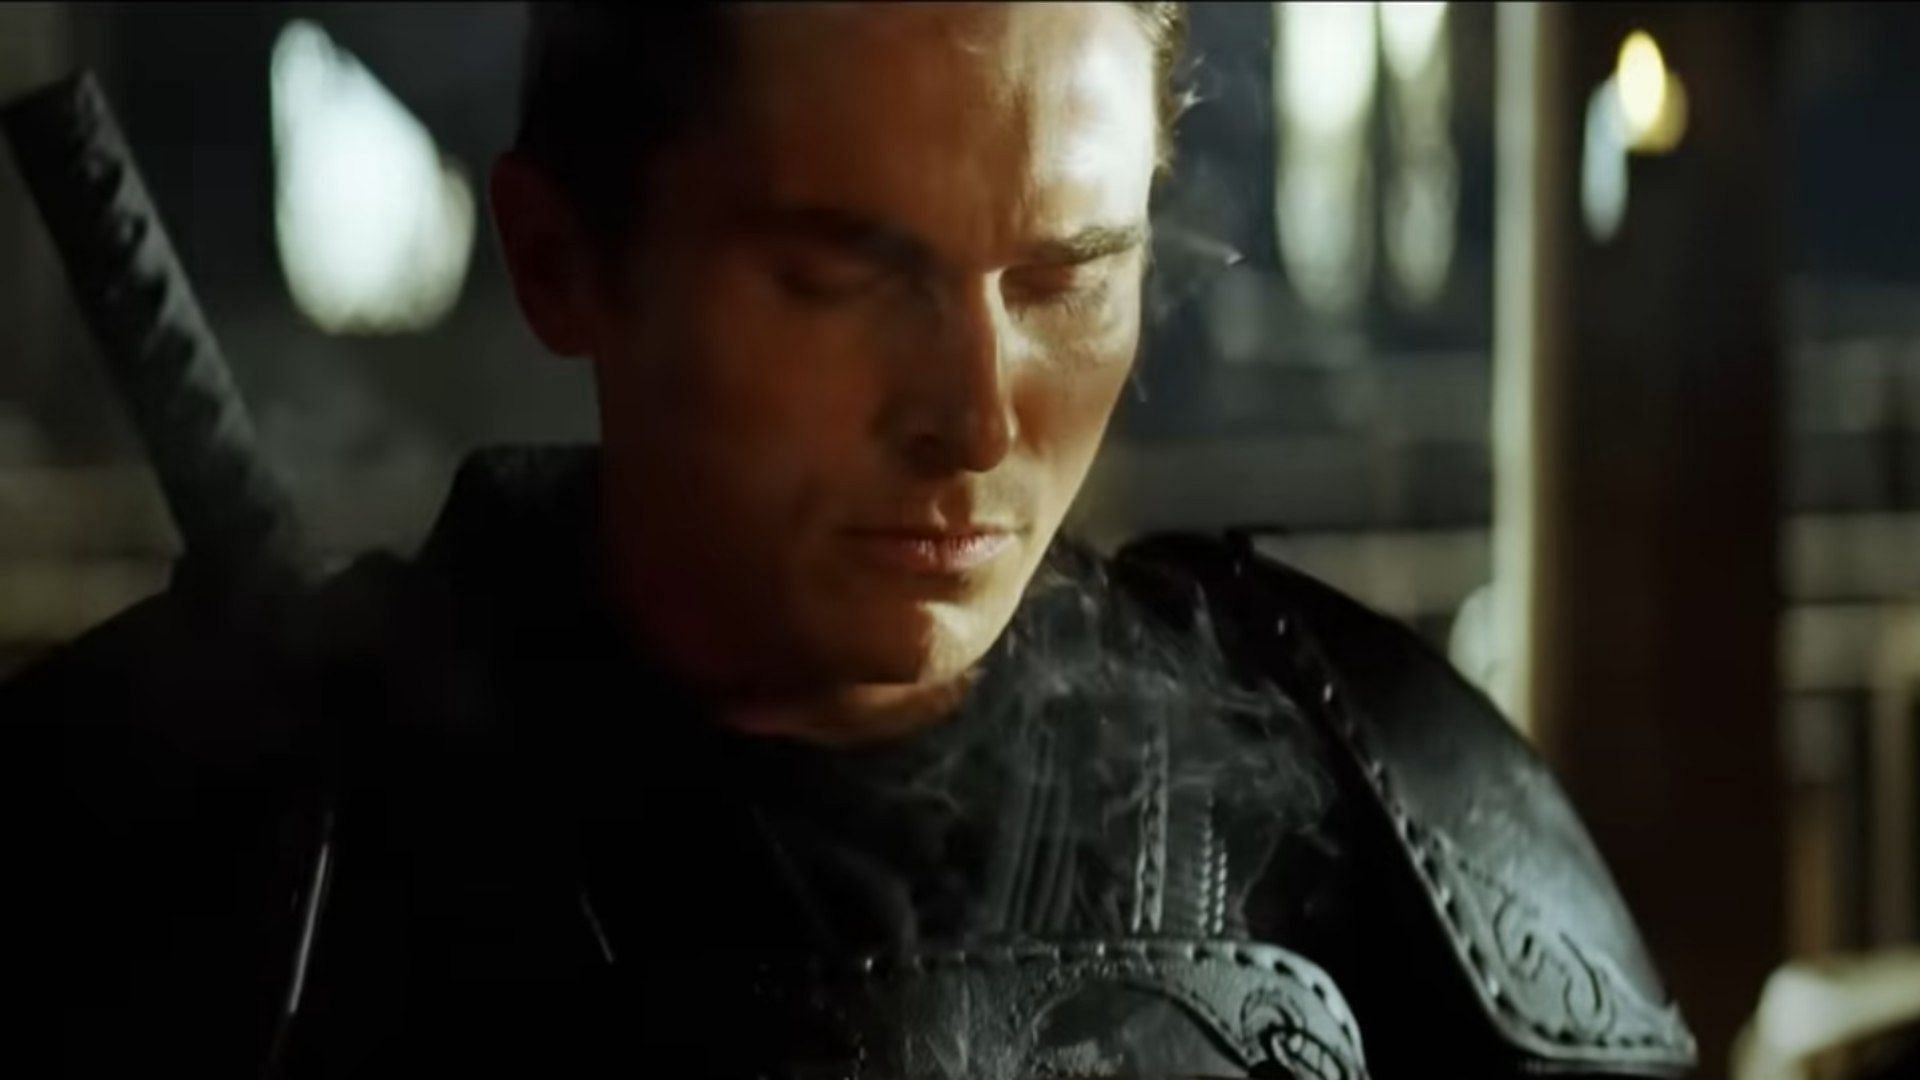 Christian Bale seen as Batman in Batman Begins (Image via Warner Bros. UK &amp; Ireland, Batman Begins trailer, 0:36)